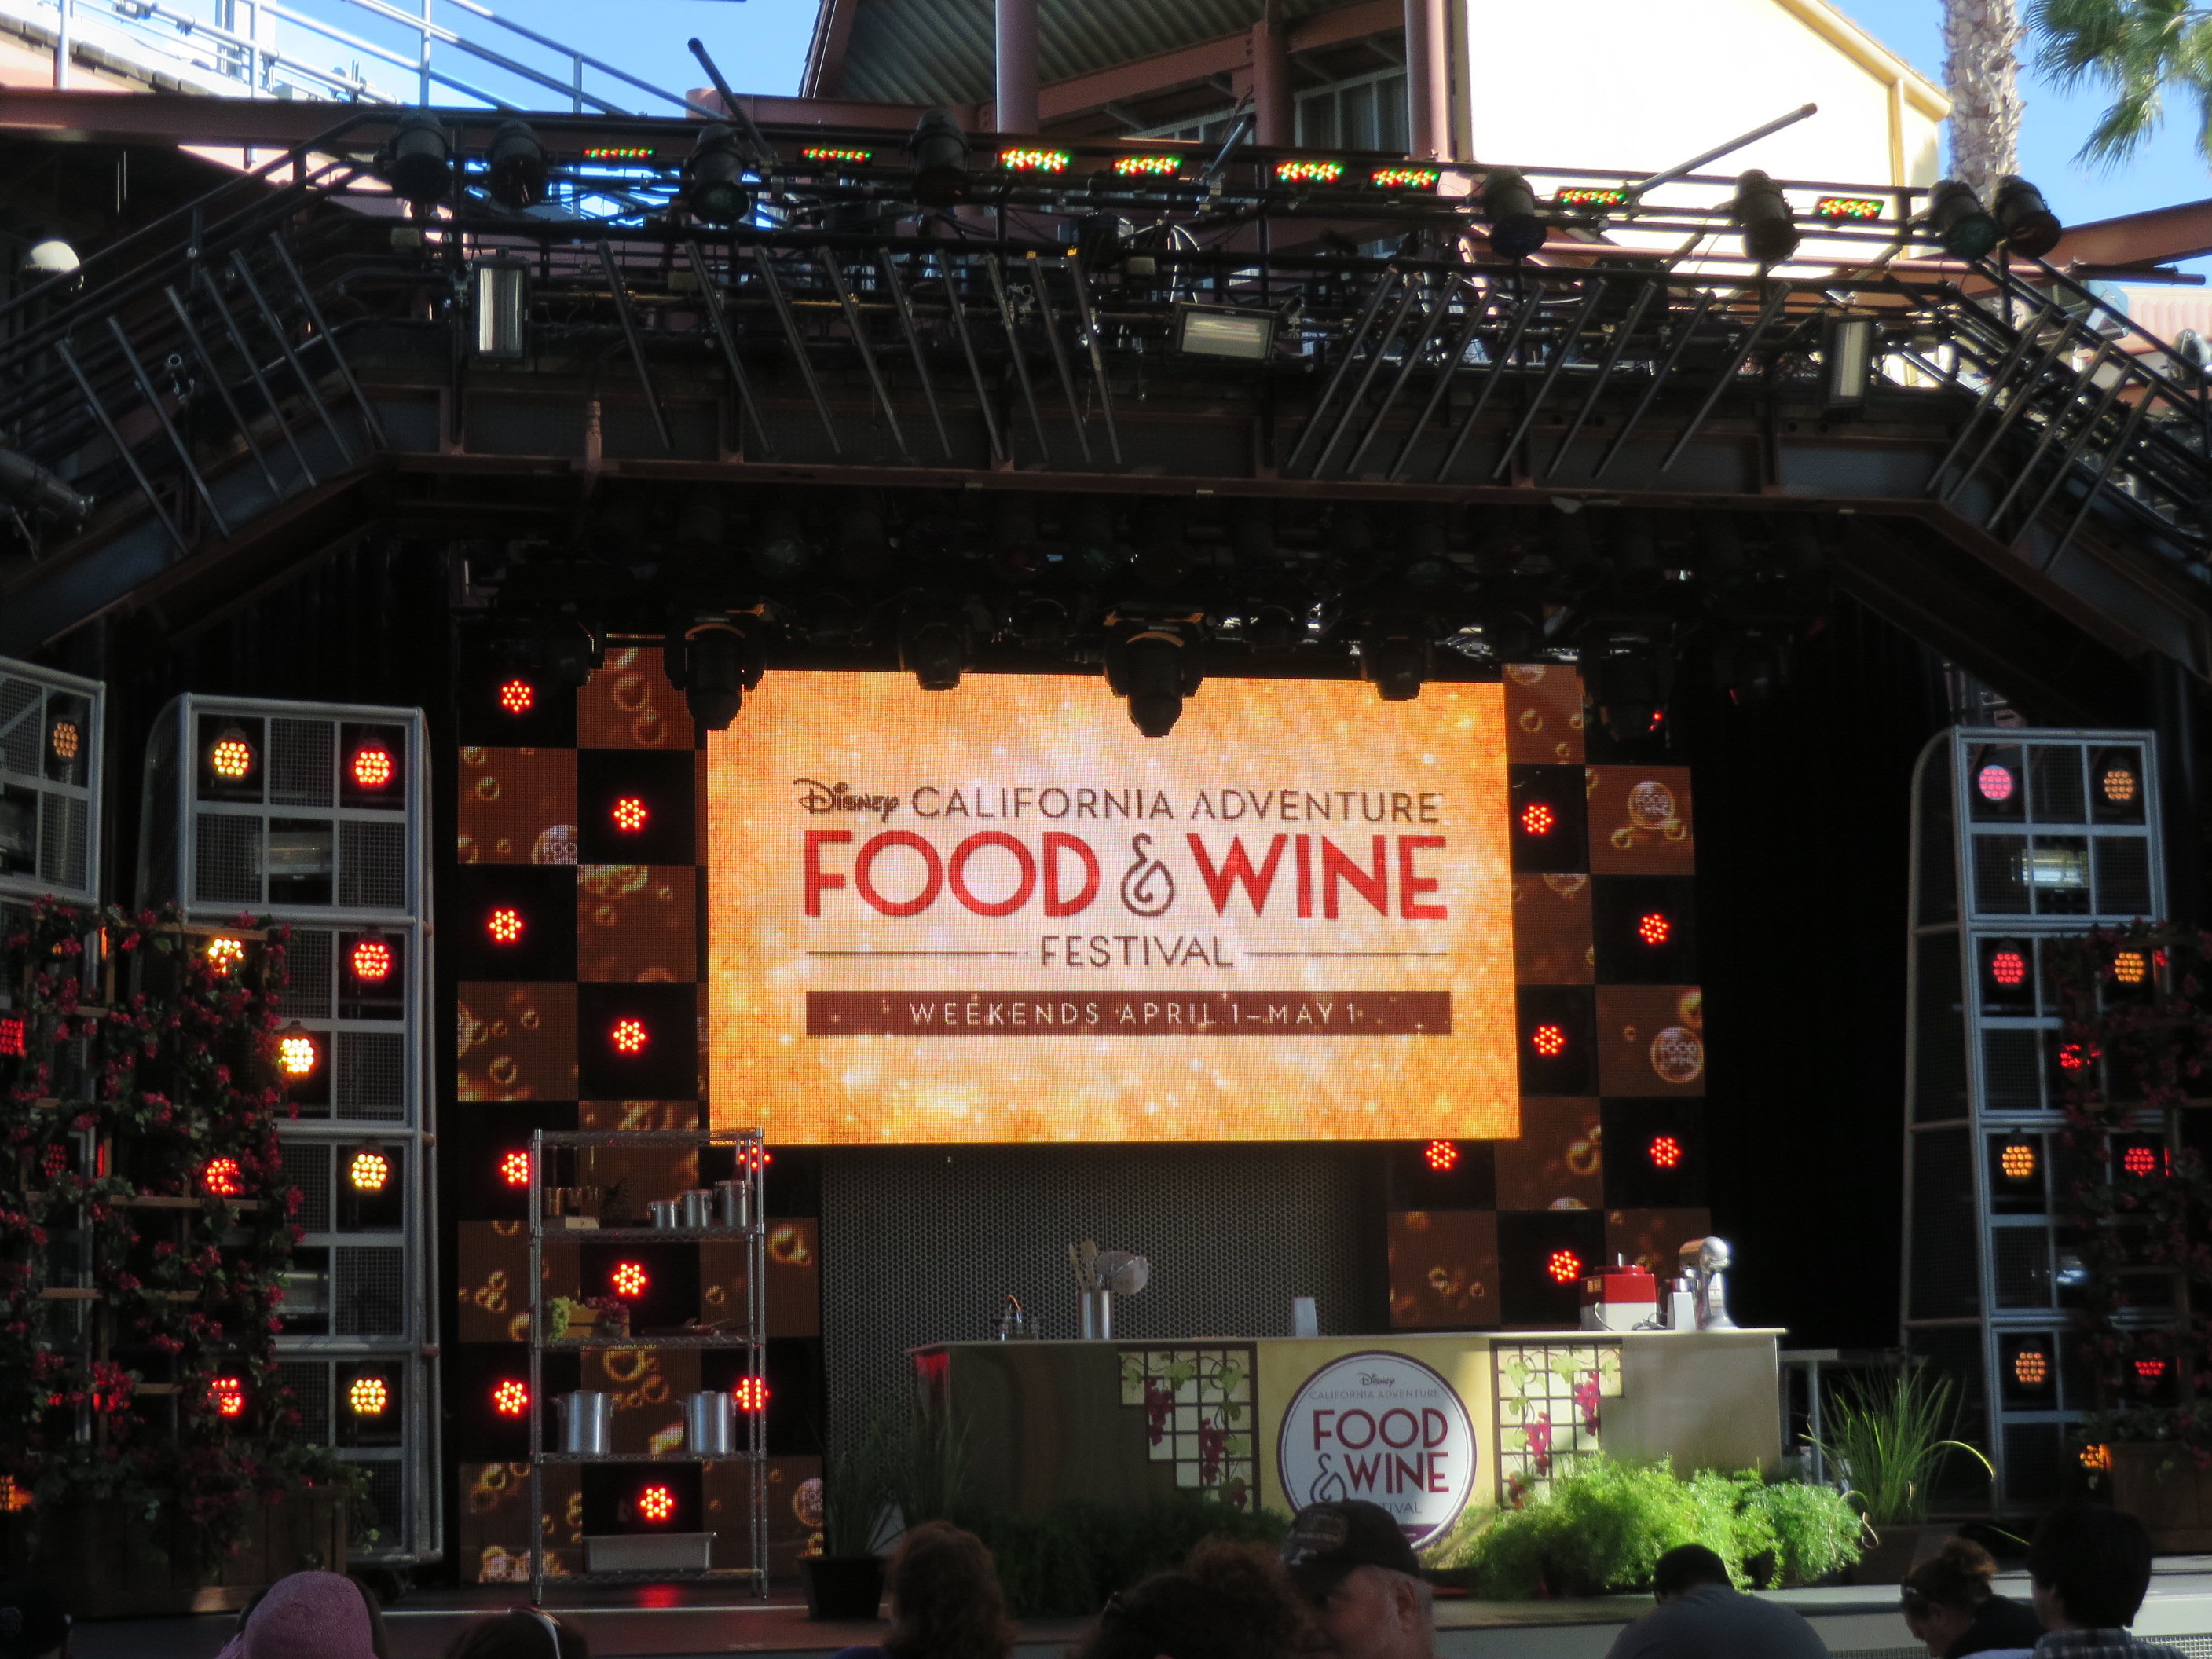 Disney California Adventure Food and Wine Festival returning!